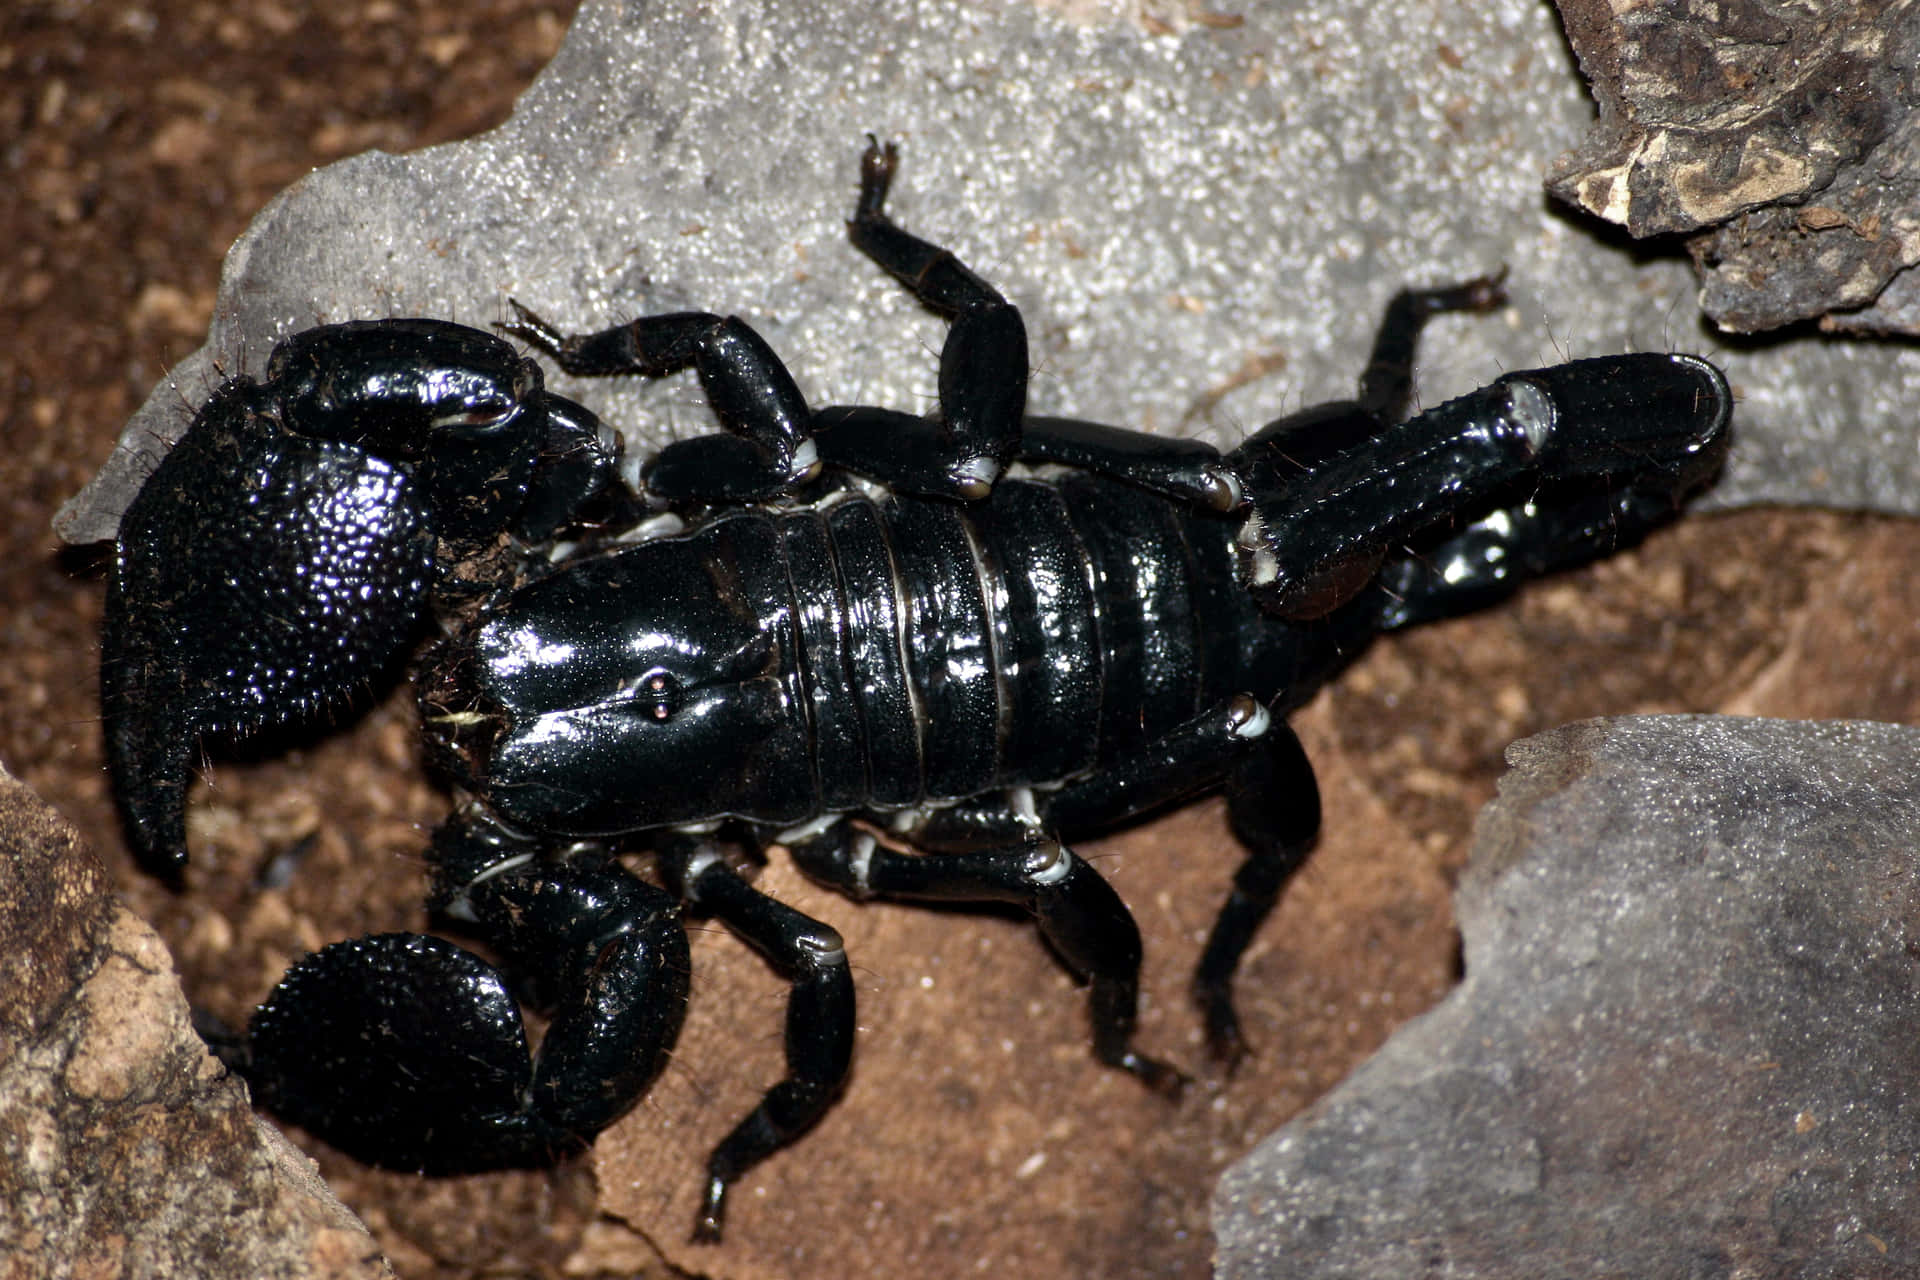 A closeup of a menacing yet magnificent scorpion